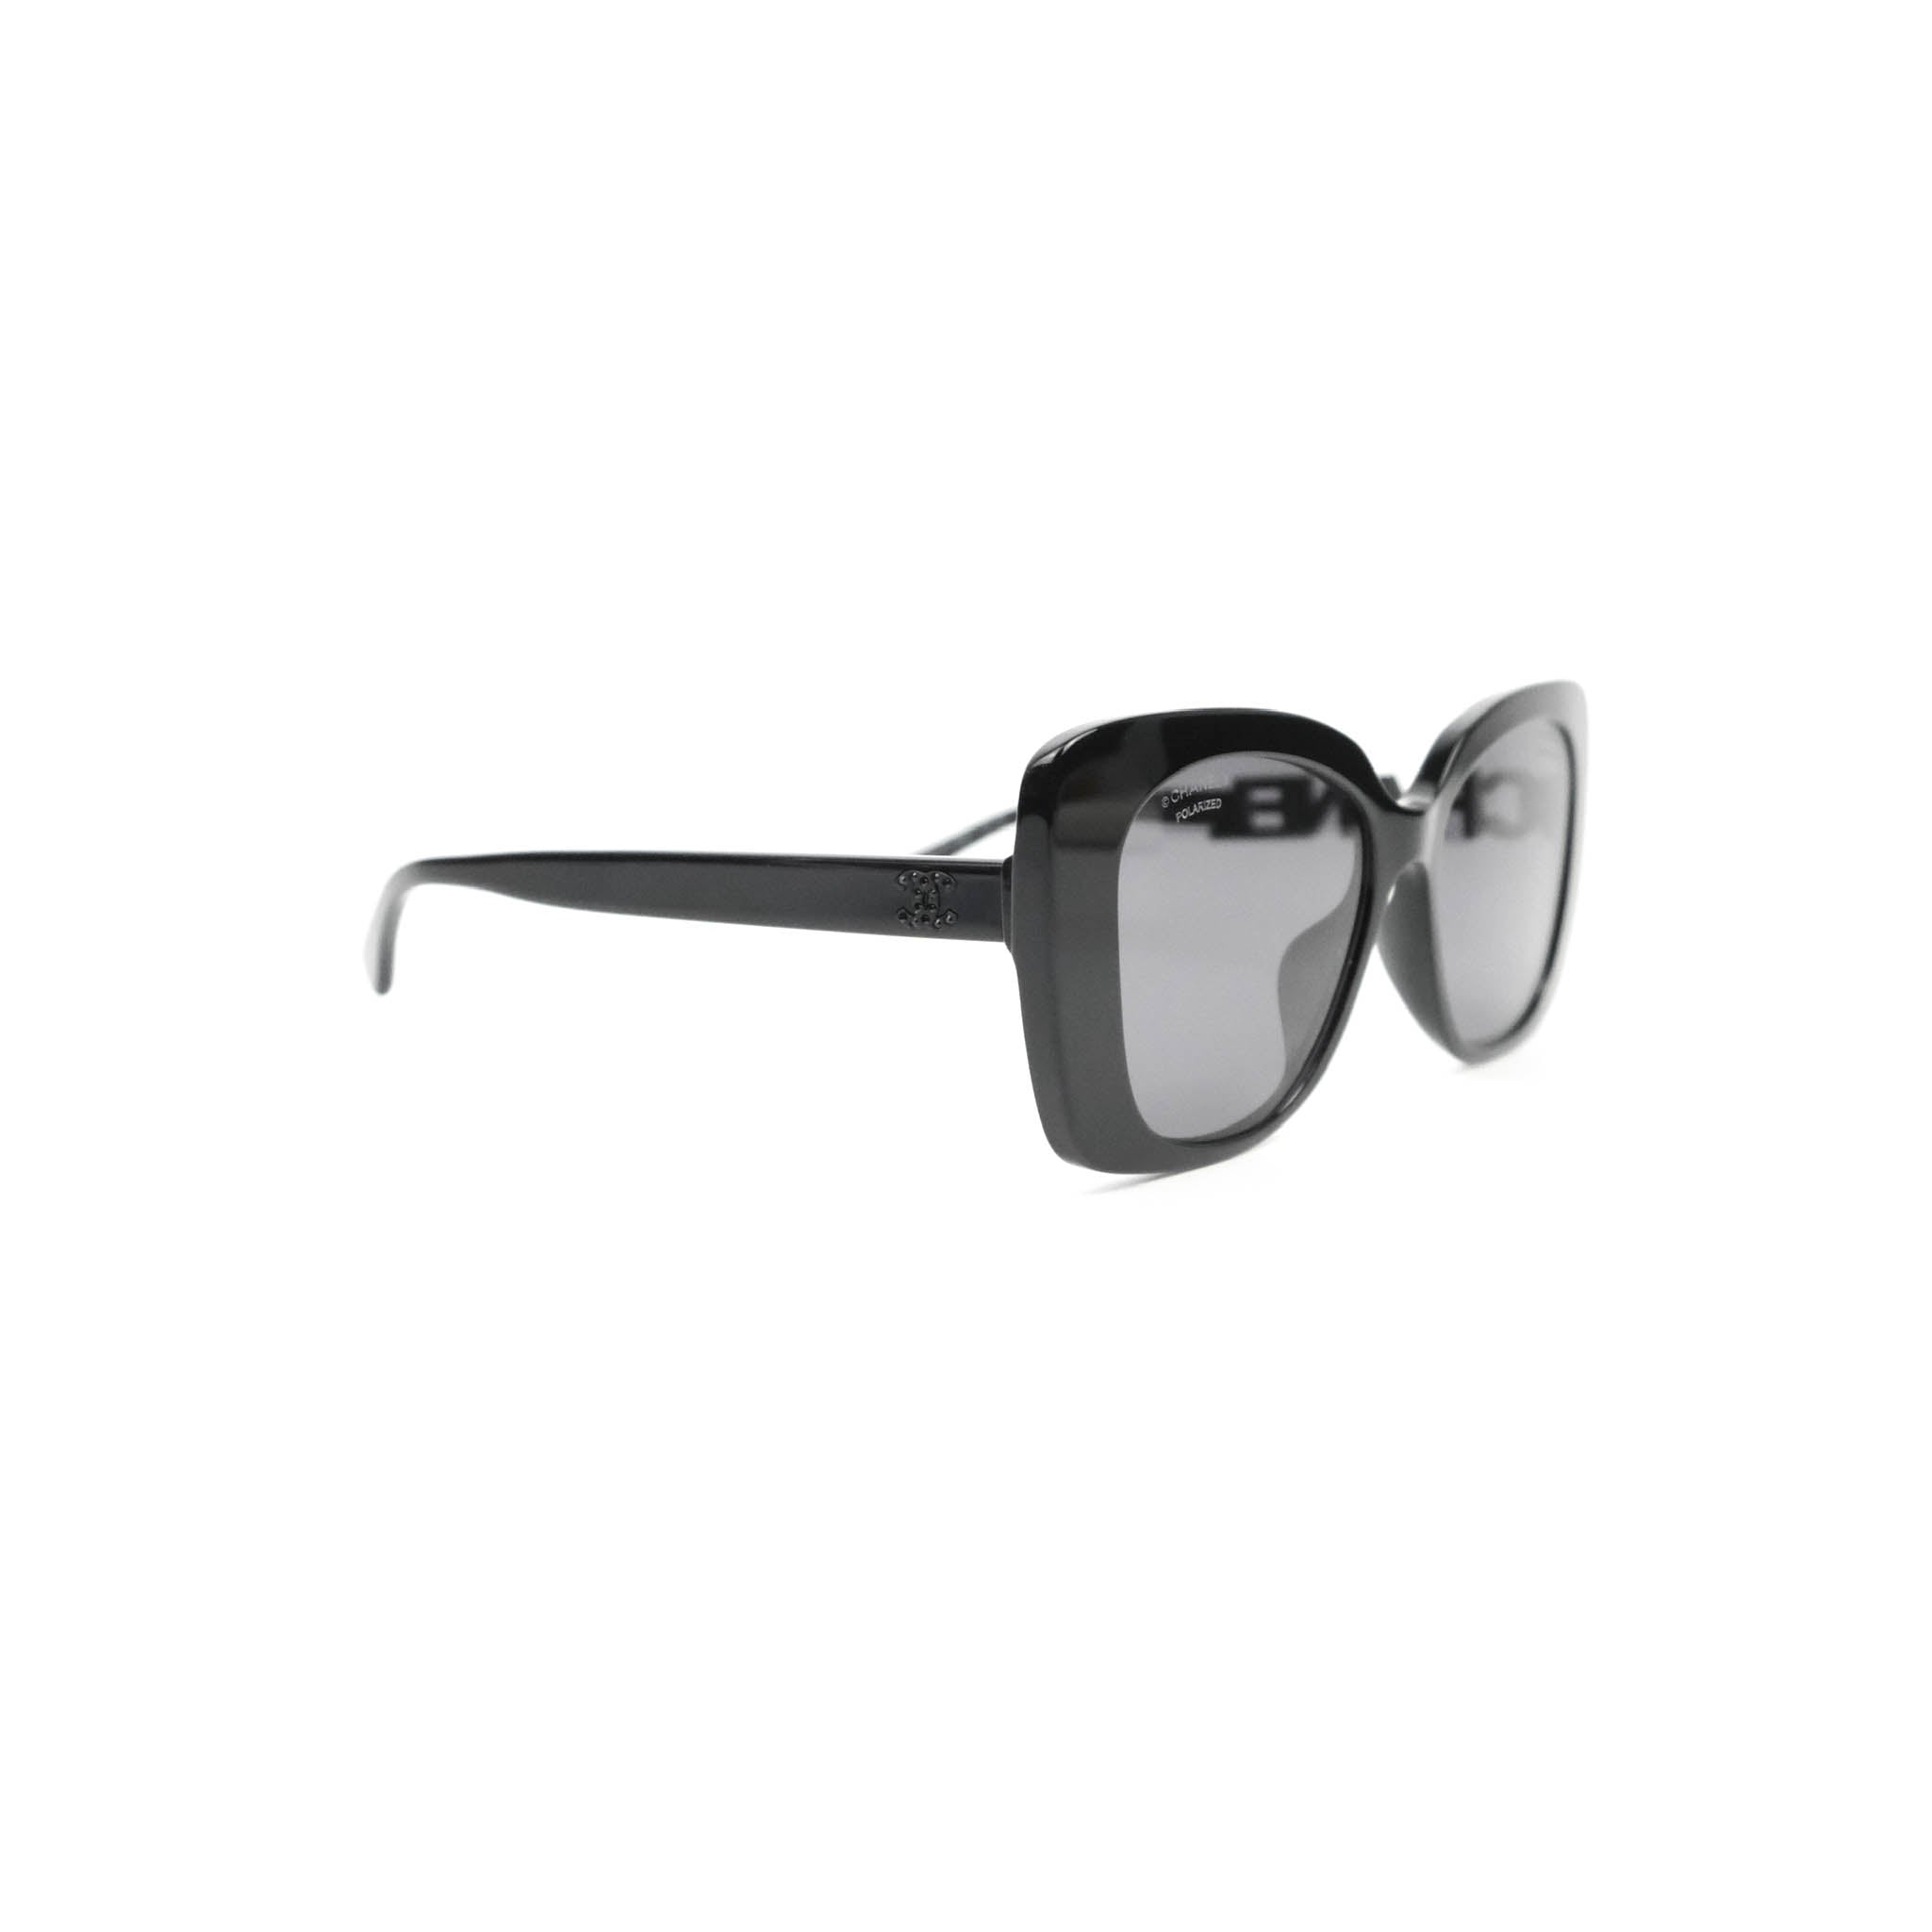 CHANEL Chain Square Outlet Sunglasses (Ref: 5487 1720/S6, Ref: 5487  1719/S6, Ref: 5487 1697/13, Ref: 5487 1721/8H)